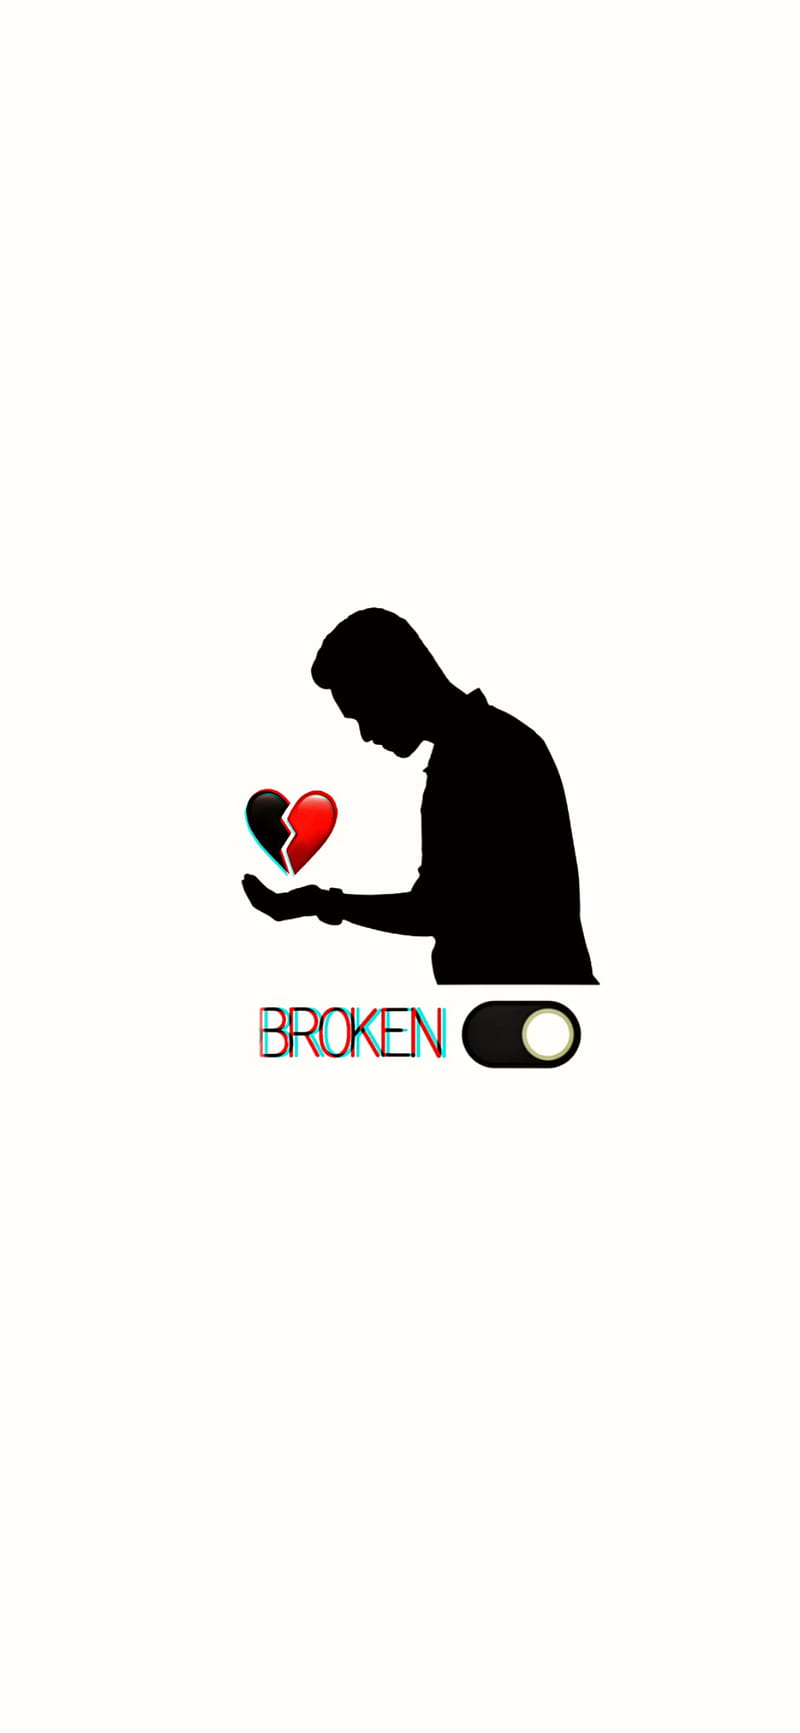 1,947 Breakup Logo Images, Stock Photos, 3D objects, & Vectors |  Shutterstock